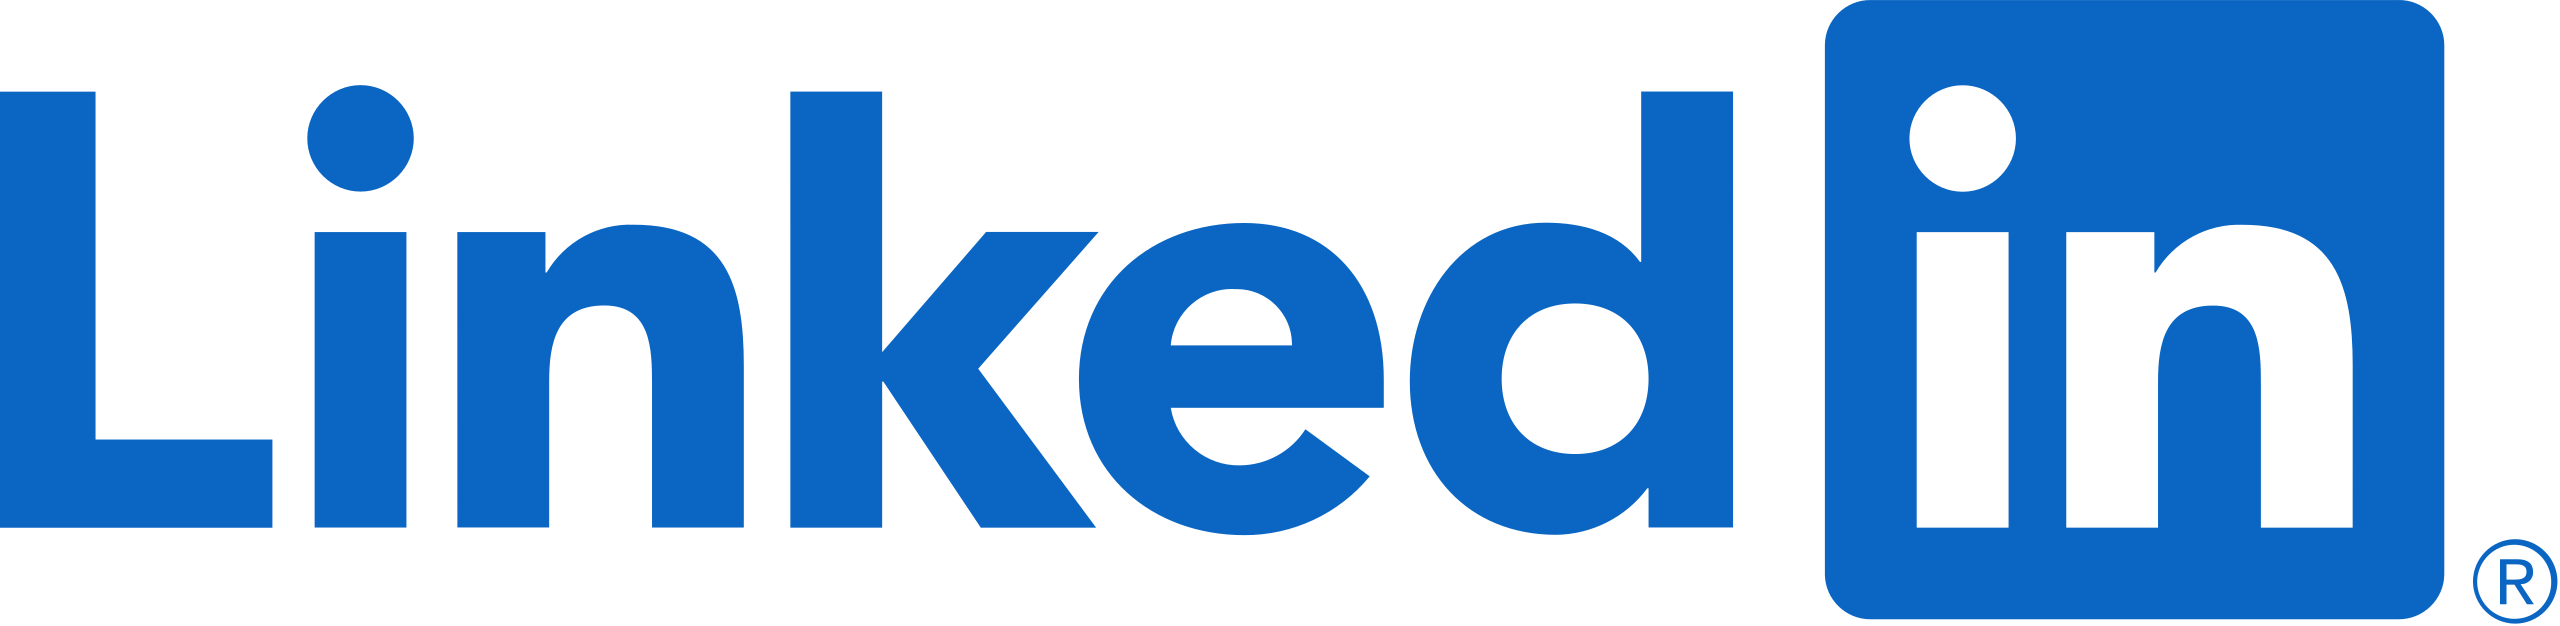 LinkedIn_Logo.svg-3